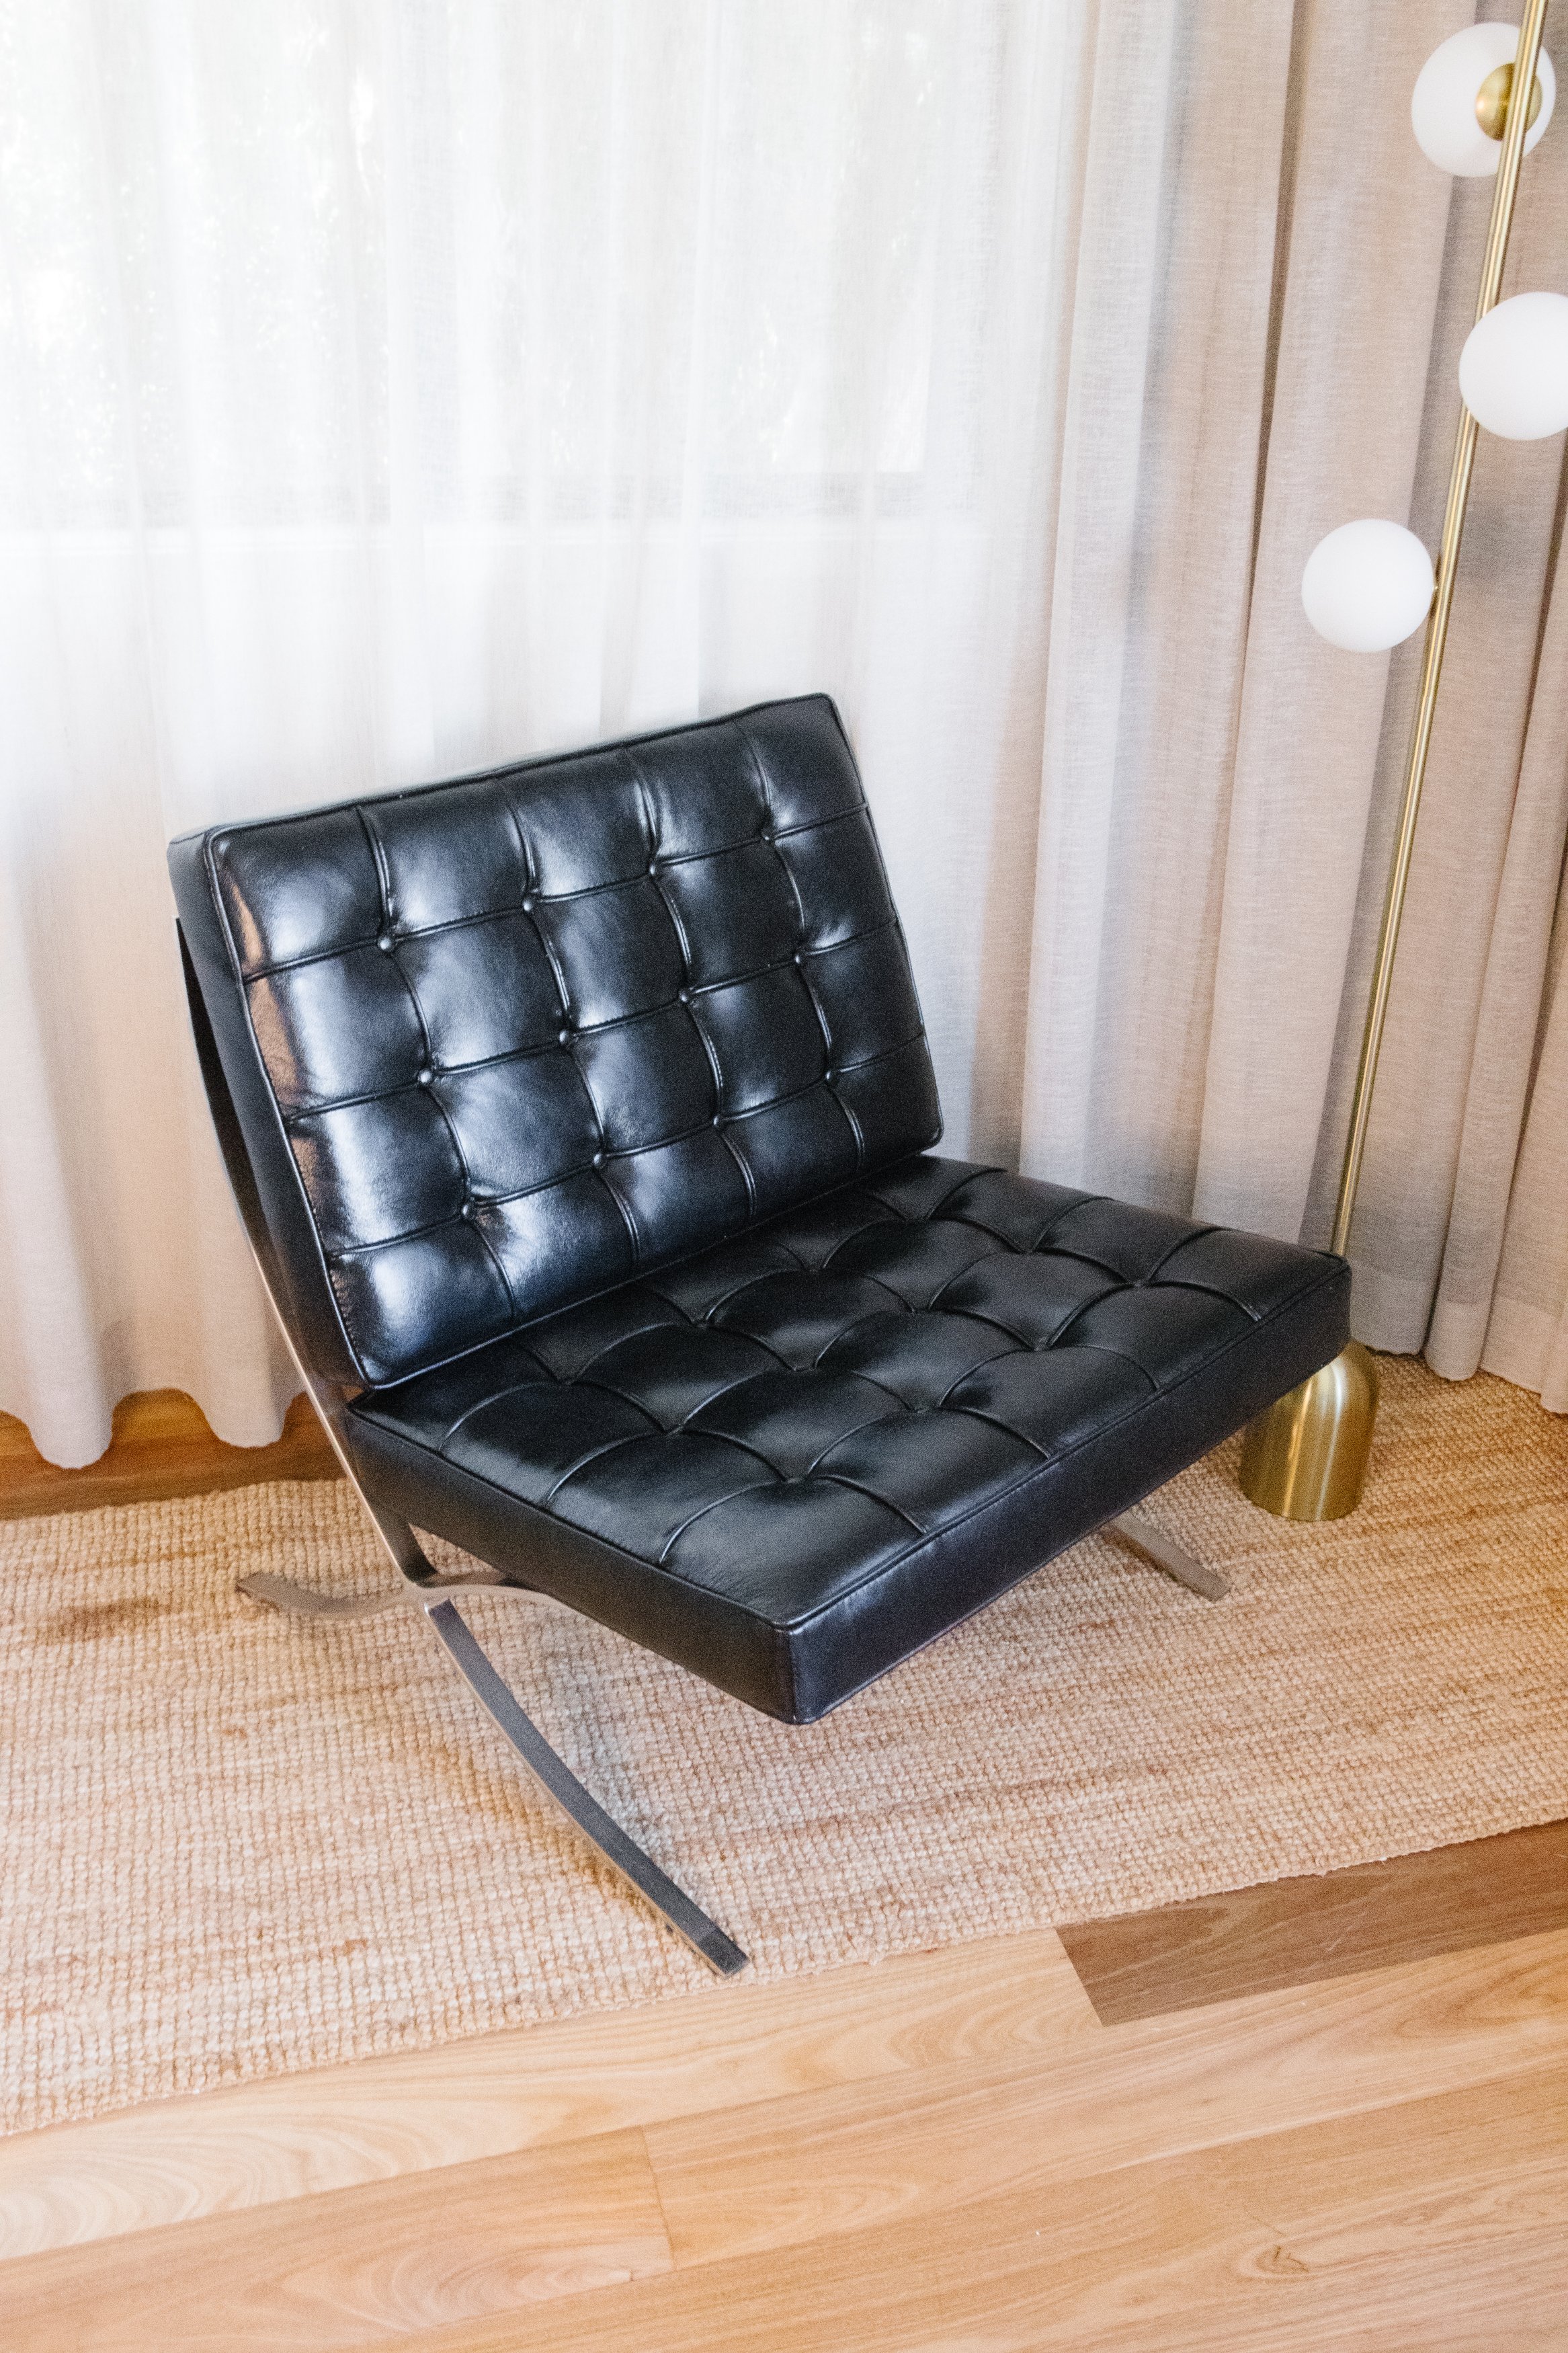 Chrome Leather Chair Restoration (30 of 54).jpg